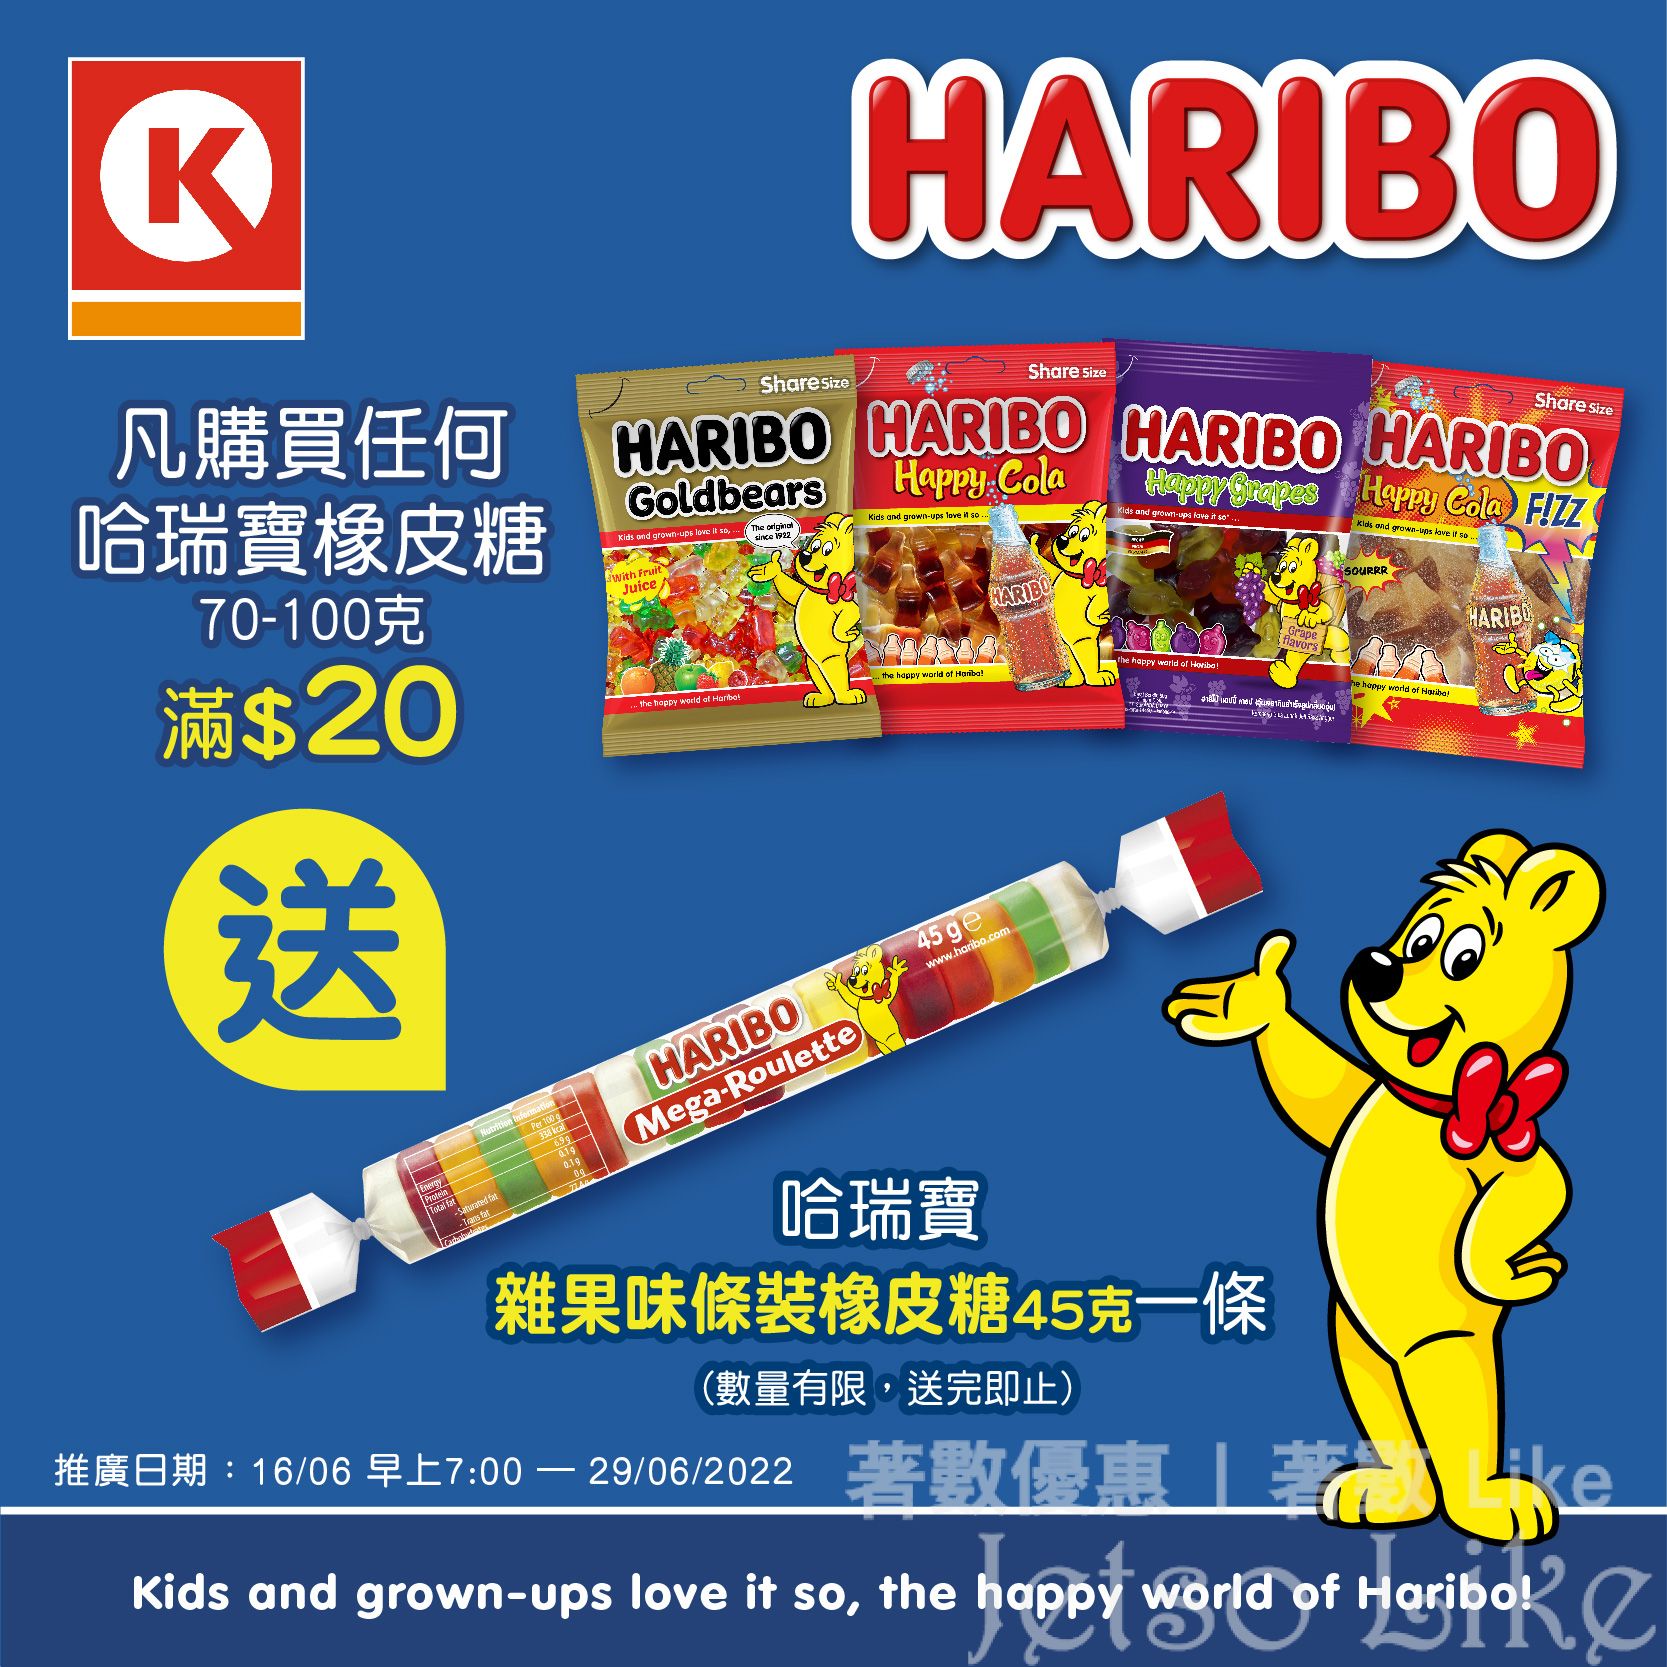 OK便利店 買 HARIBO橡皮糖 送 雜果味條裝橡皮糖